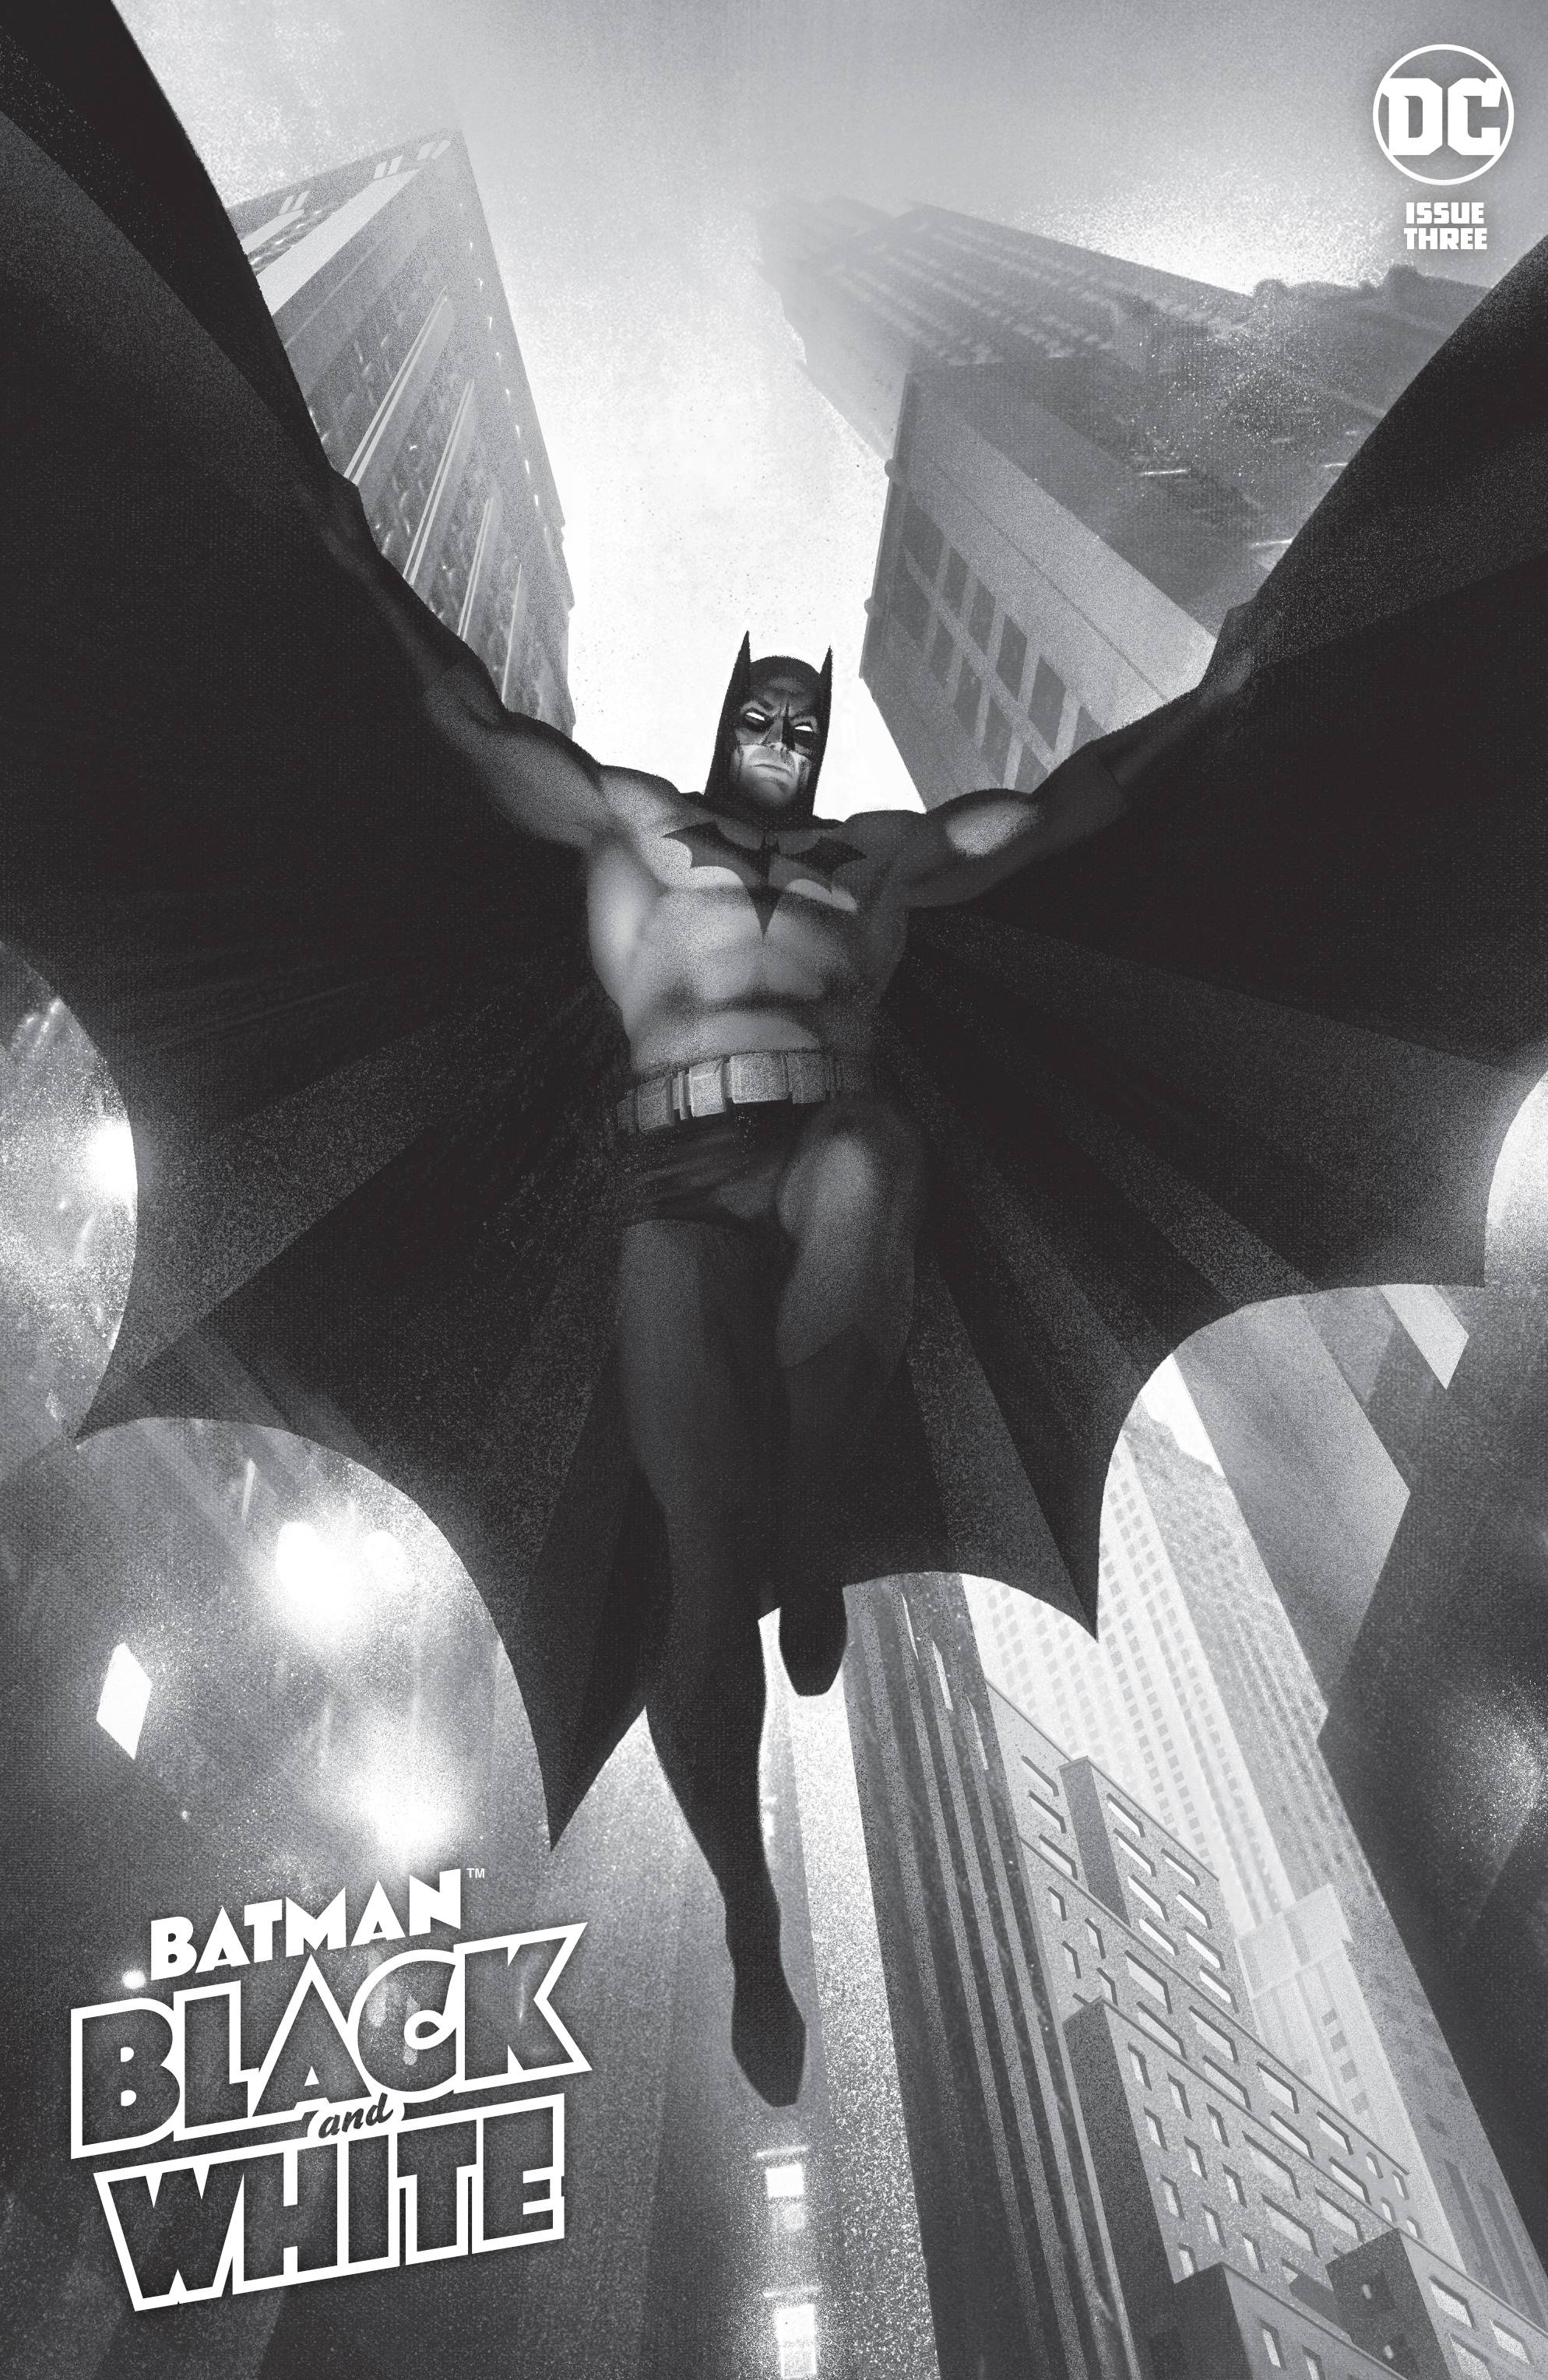 BATMAN BLACK & WHITE #3 (OF 6) | Game Master's Emporium (The New GME)